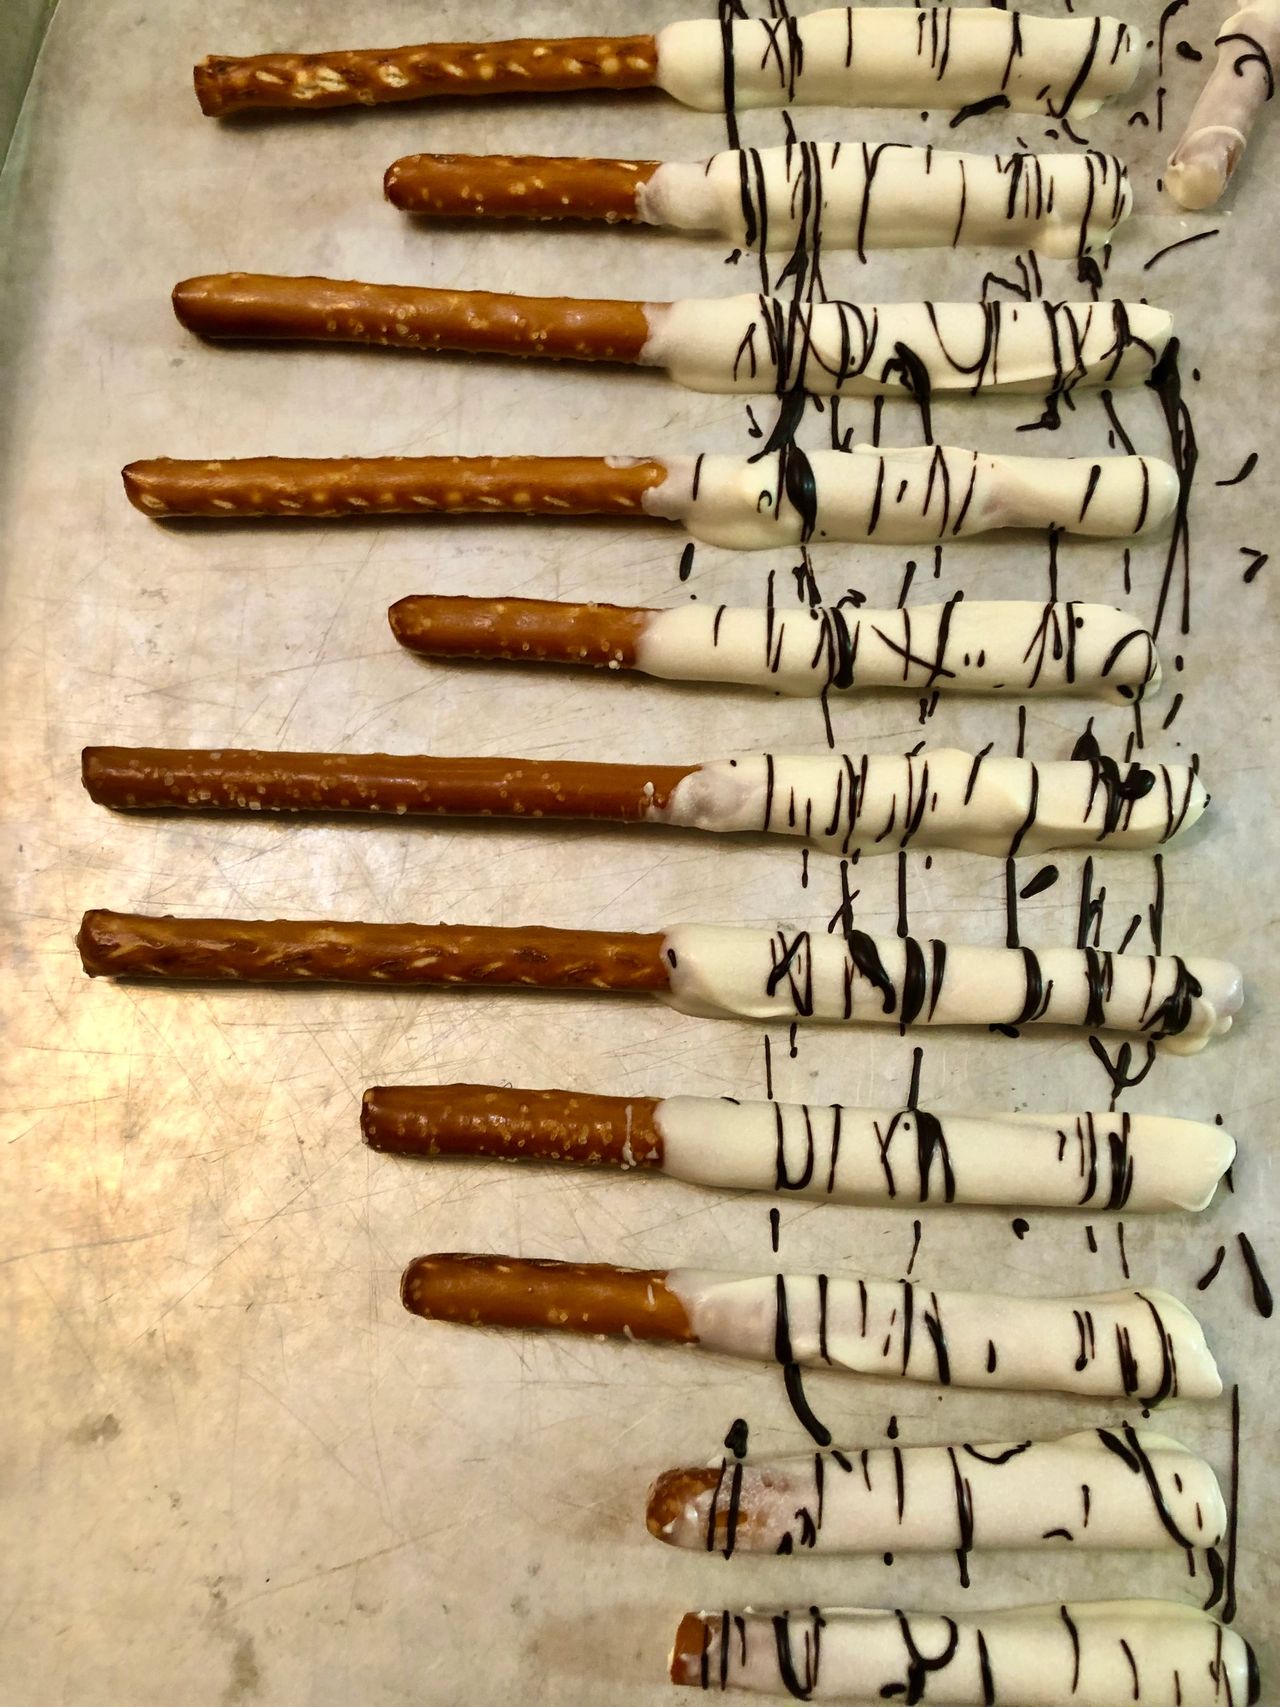 Birch bark pretzel rods in progress.